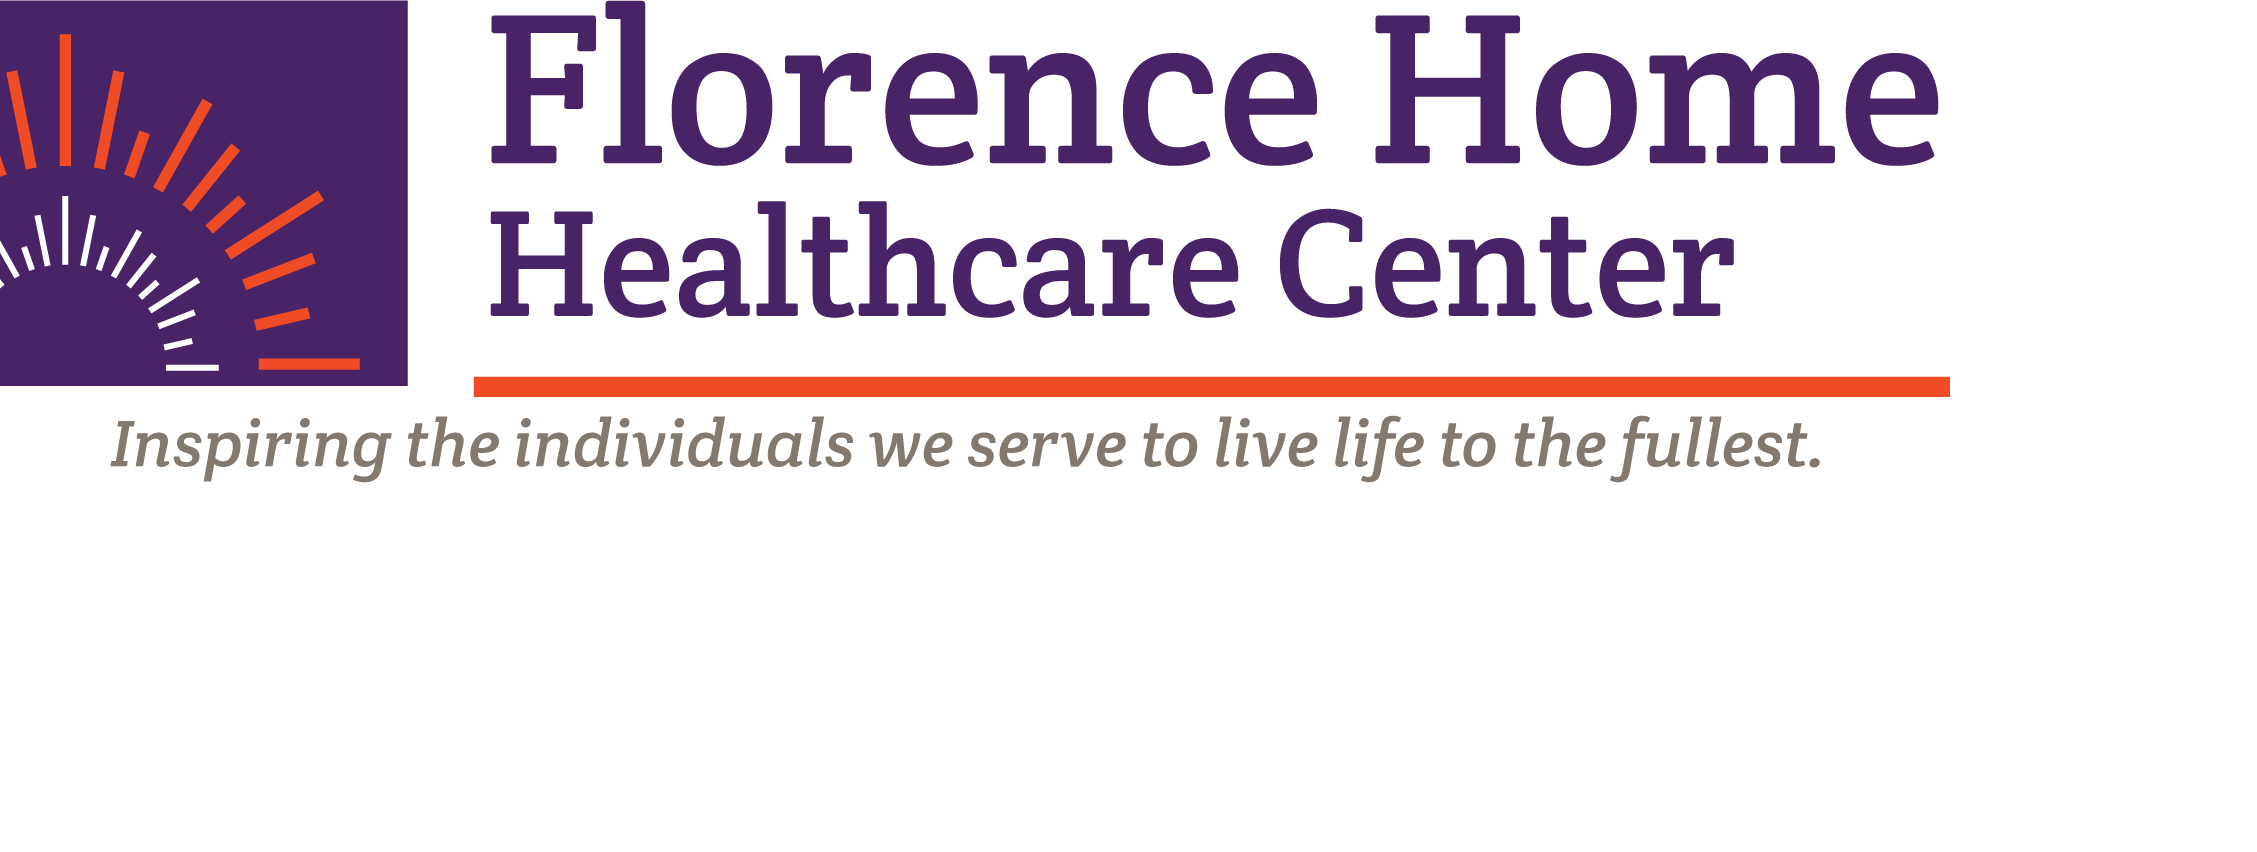 Florence Home Healthcare Center Logo copy